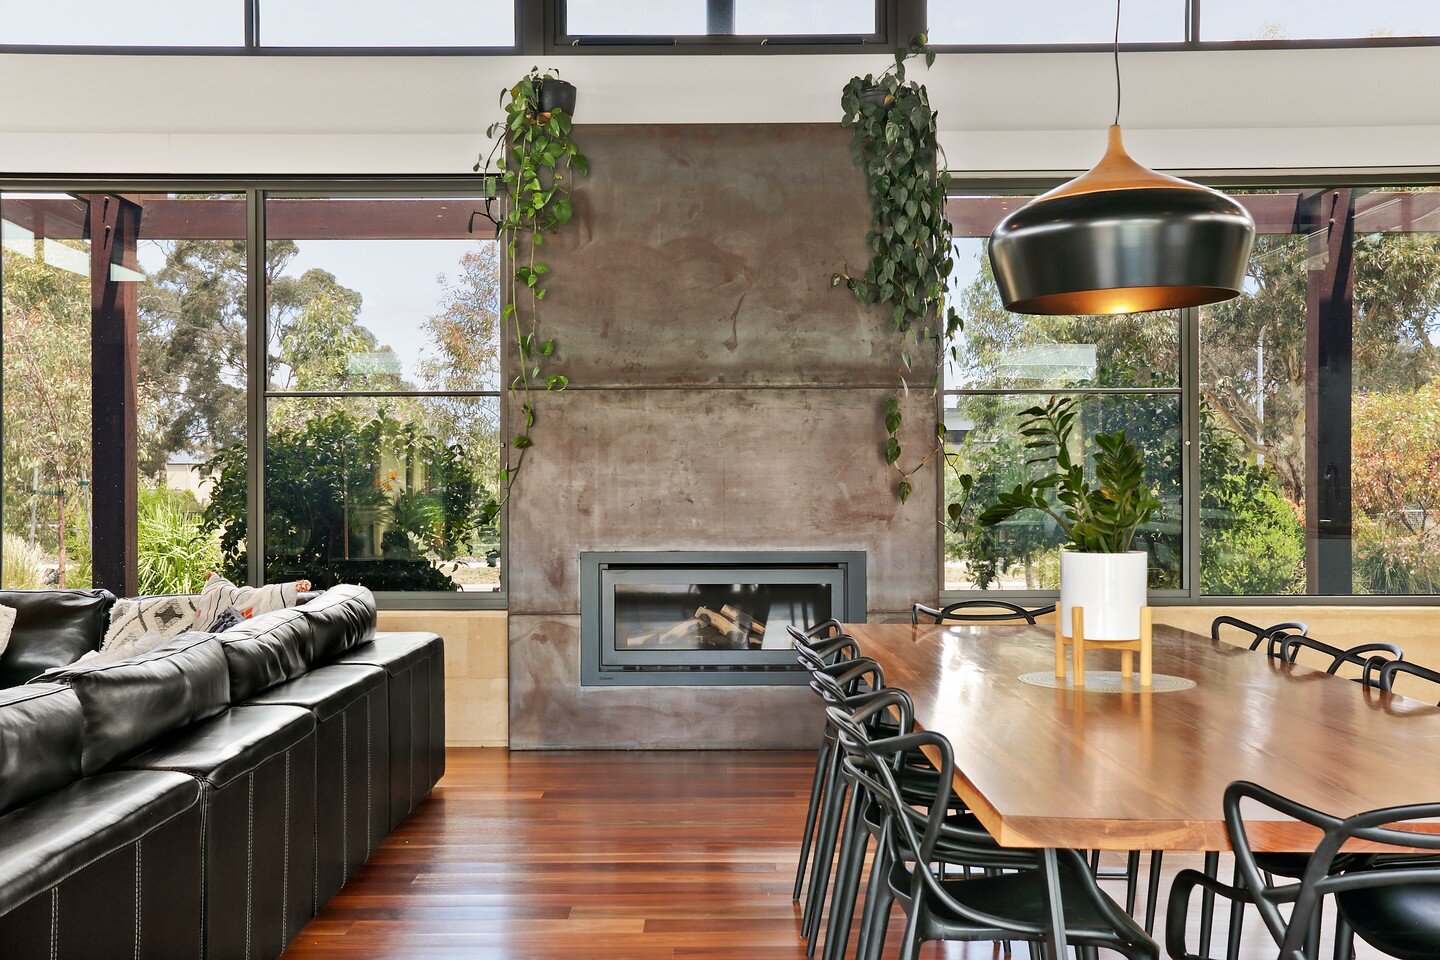 Bringing nature indoors 🌱
#greenery #plants #buildingdesign #interior #design #rammedearth #fireplace